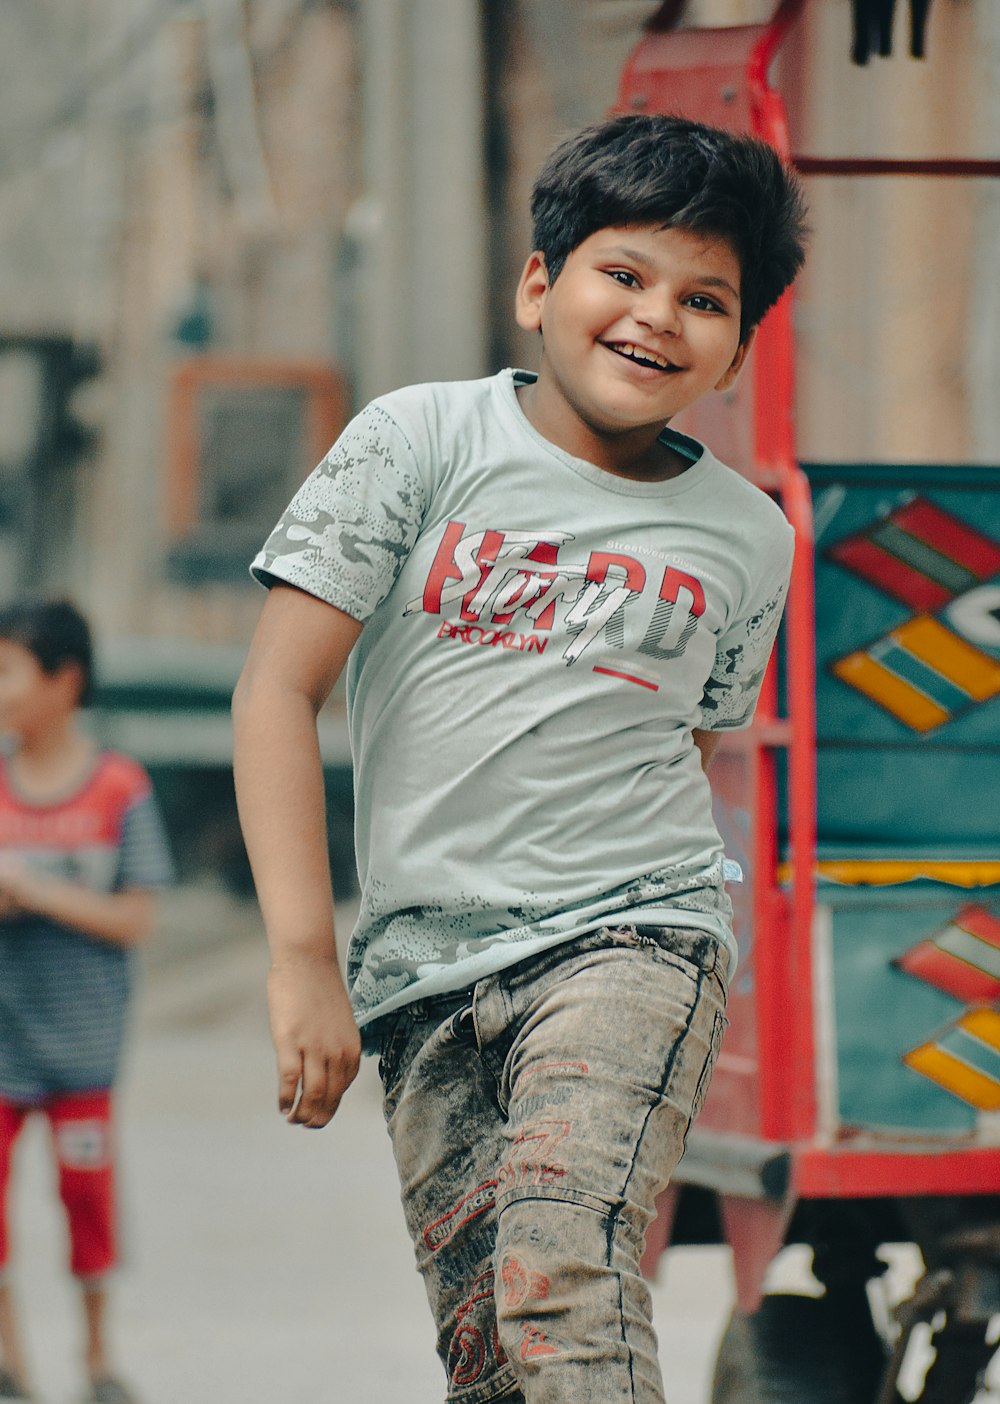 a boy smiling at the camera